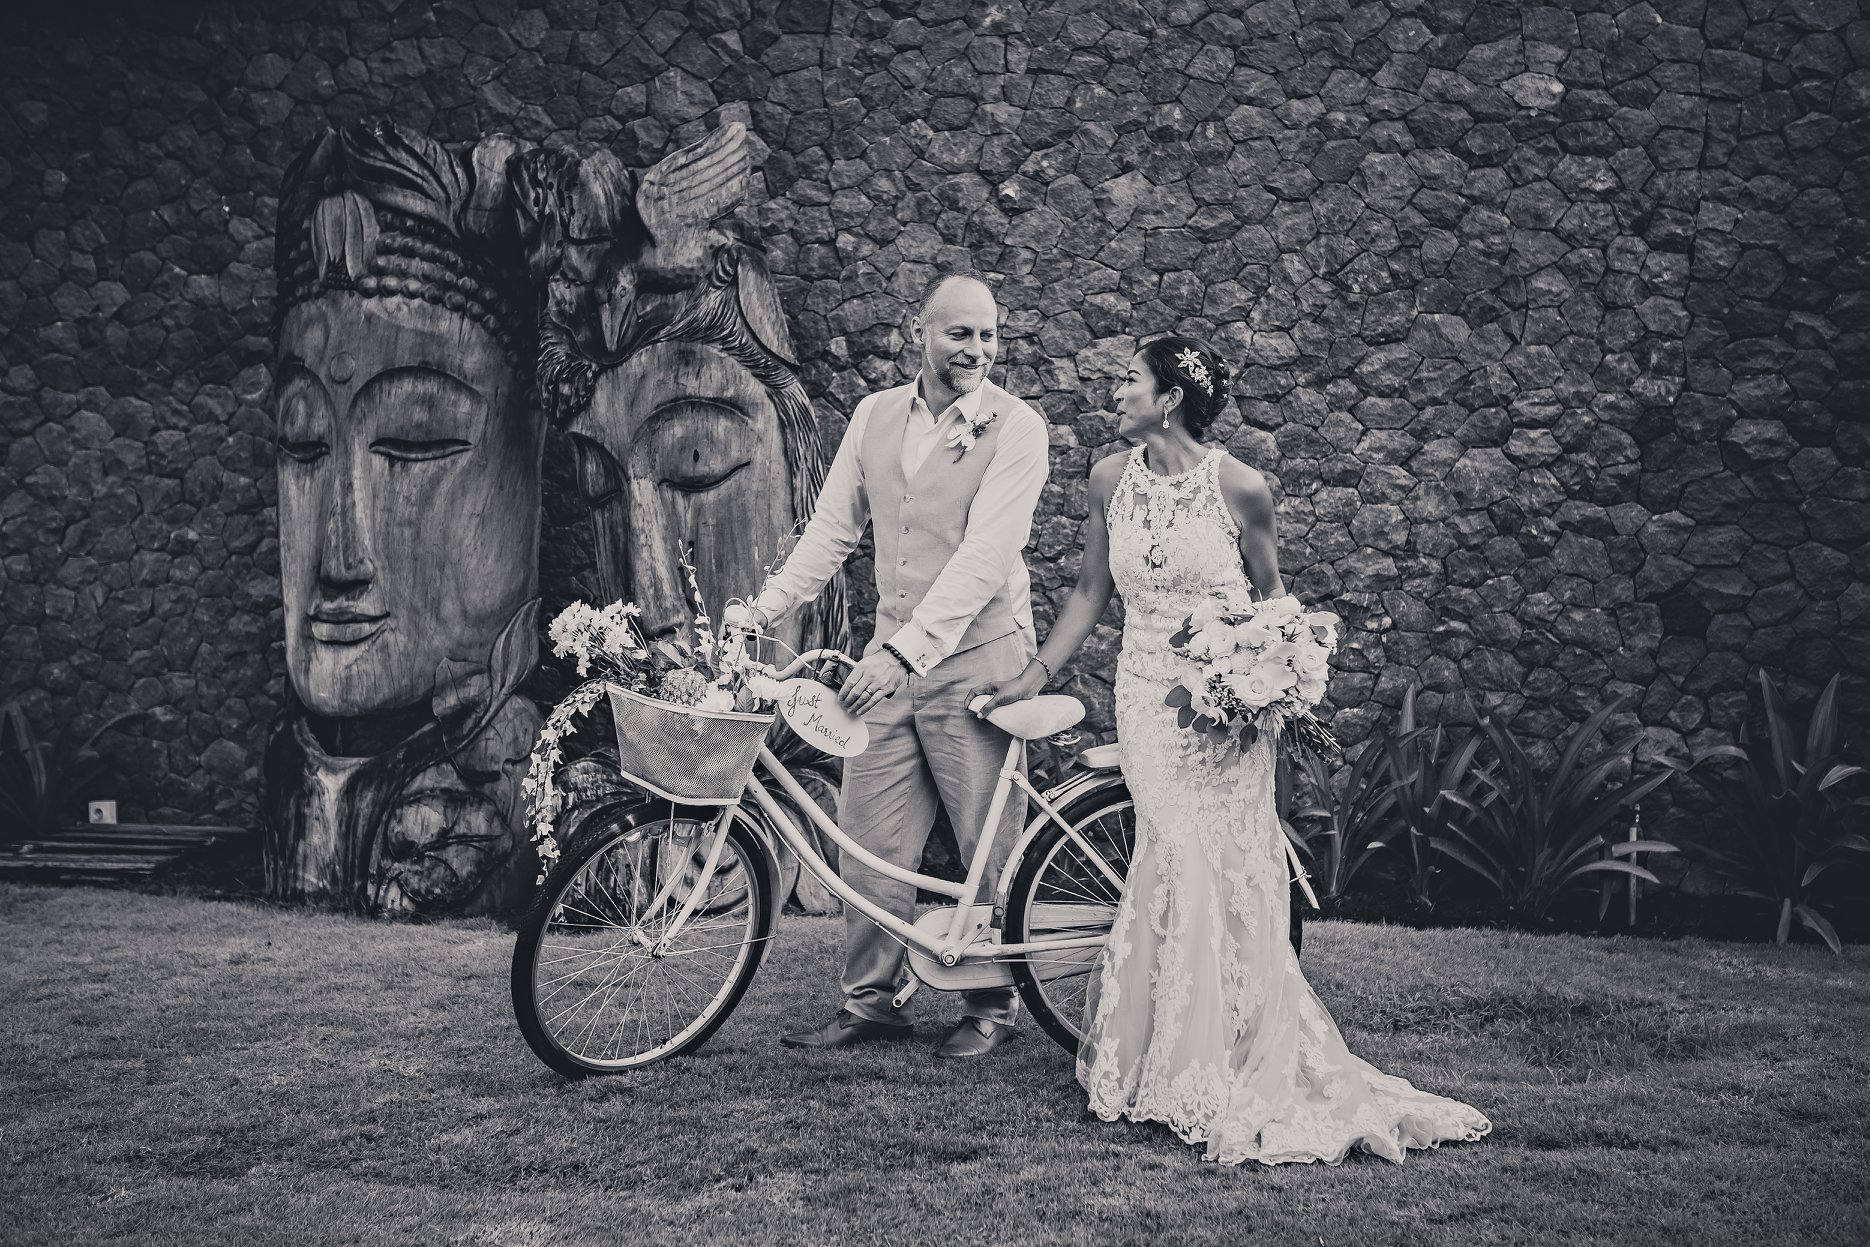 Balinese female wedding photographer